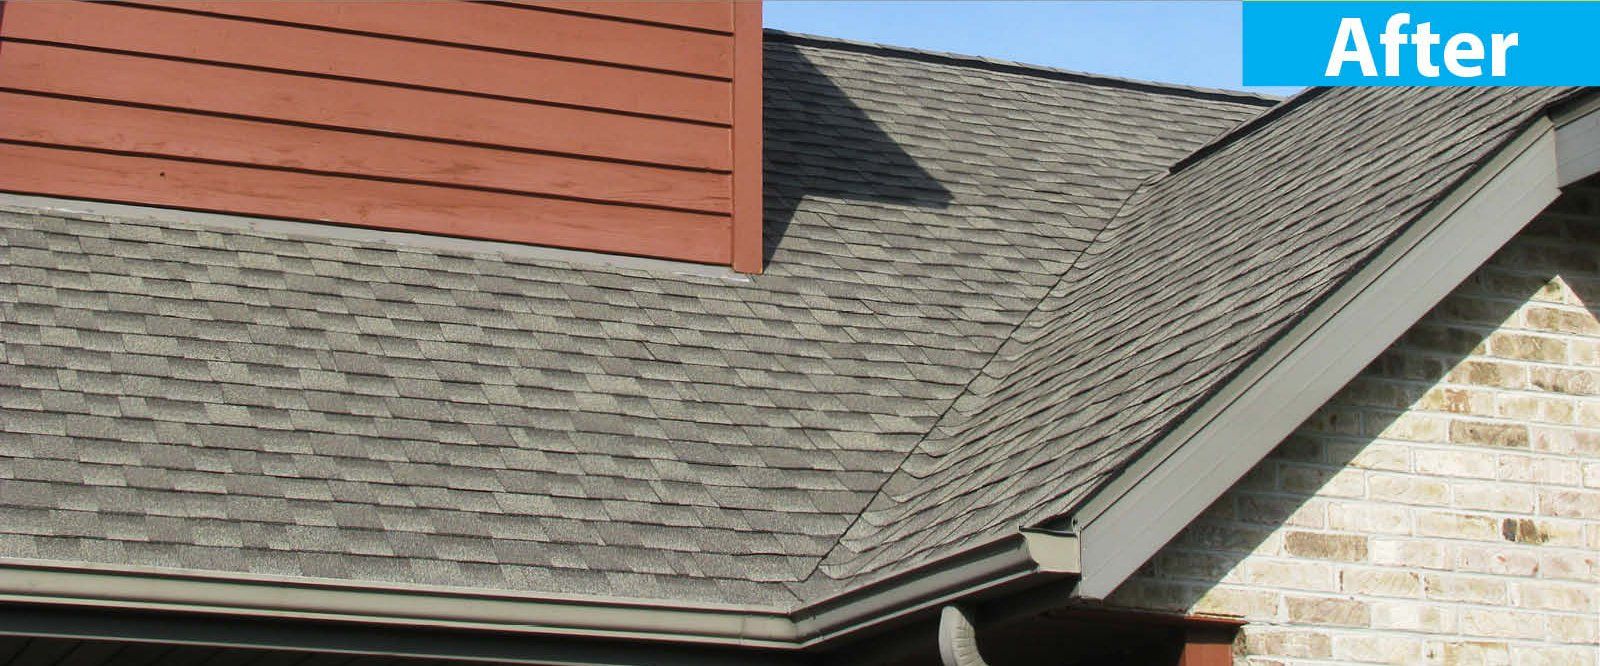 After Asphalt Roof Repair — Burlington, WI — Mather’s Improvement Service LTD